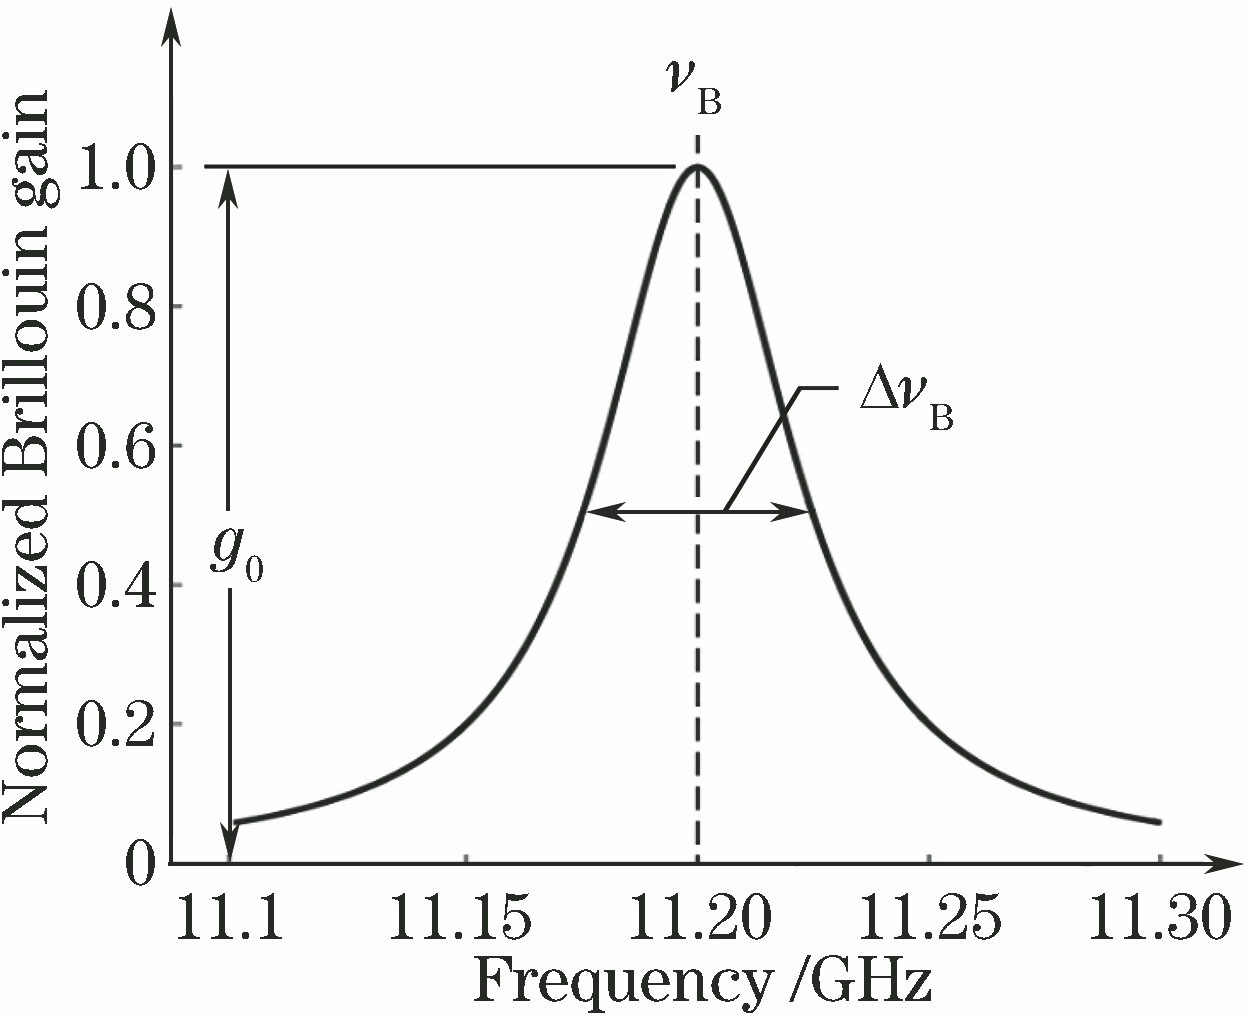 Diagram of Brillouin scattering signal